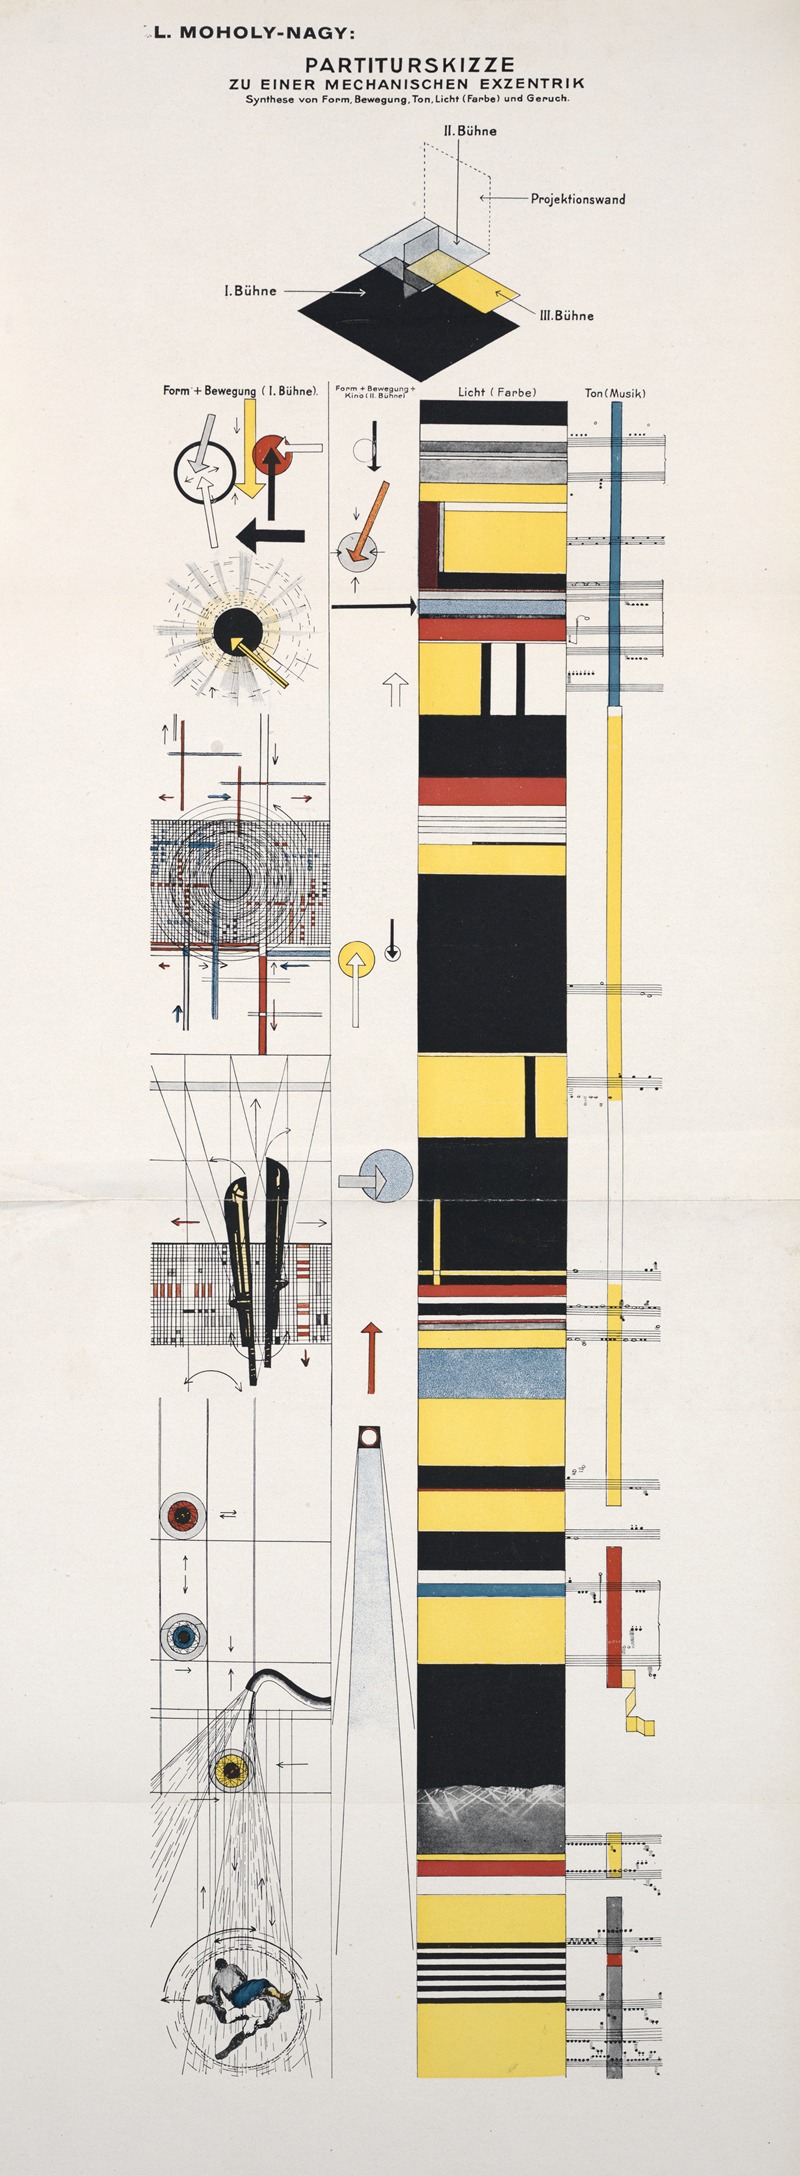 László Moholy-Nagy - Partiturskizze zu einer mechanischen exzentrik